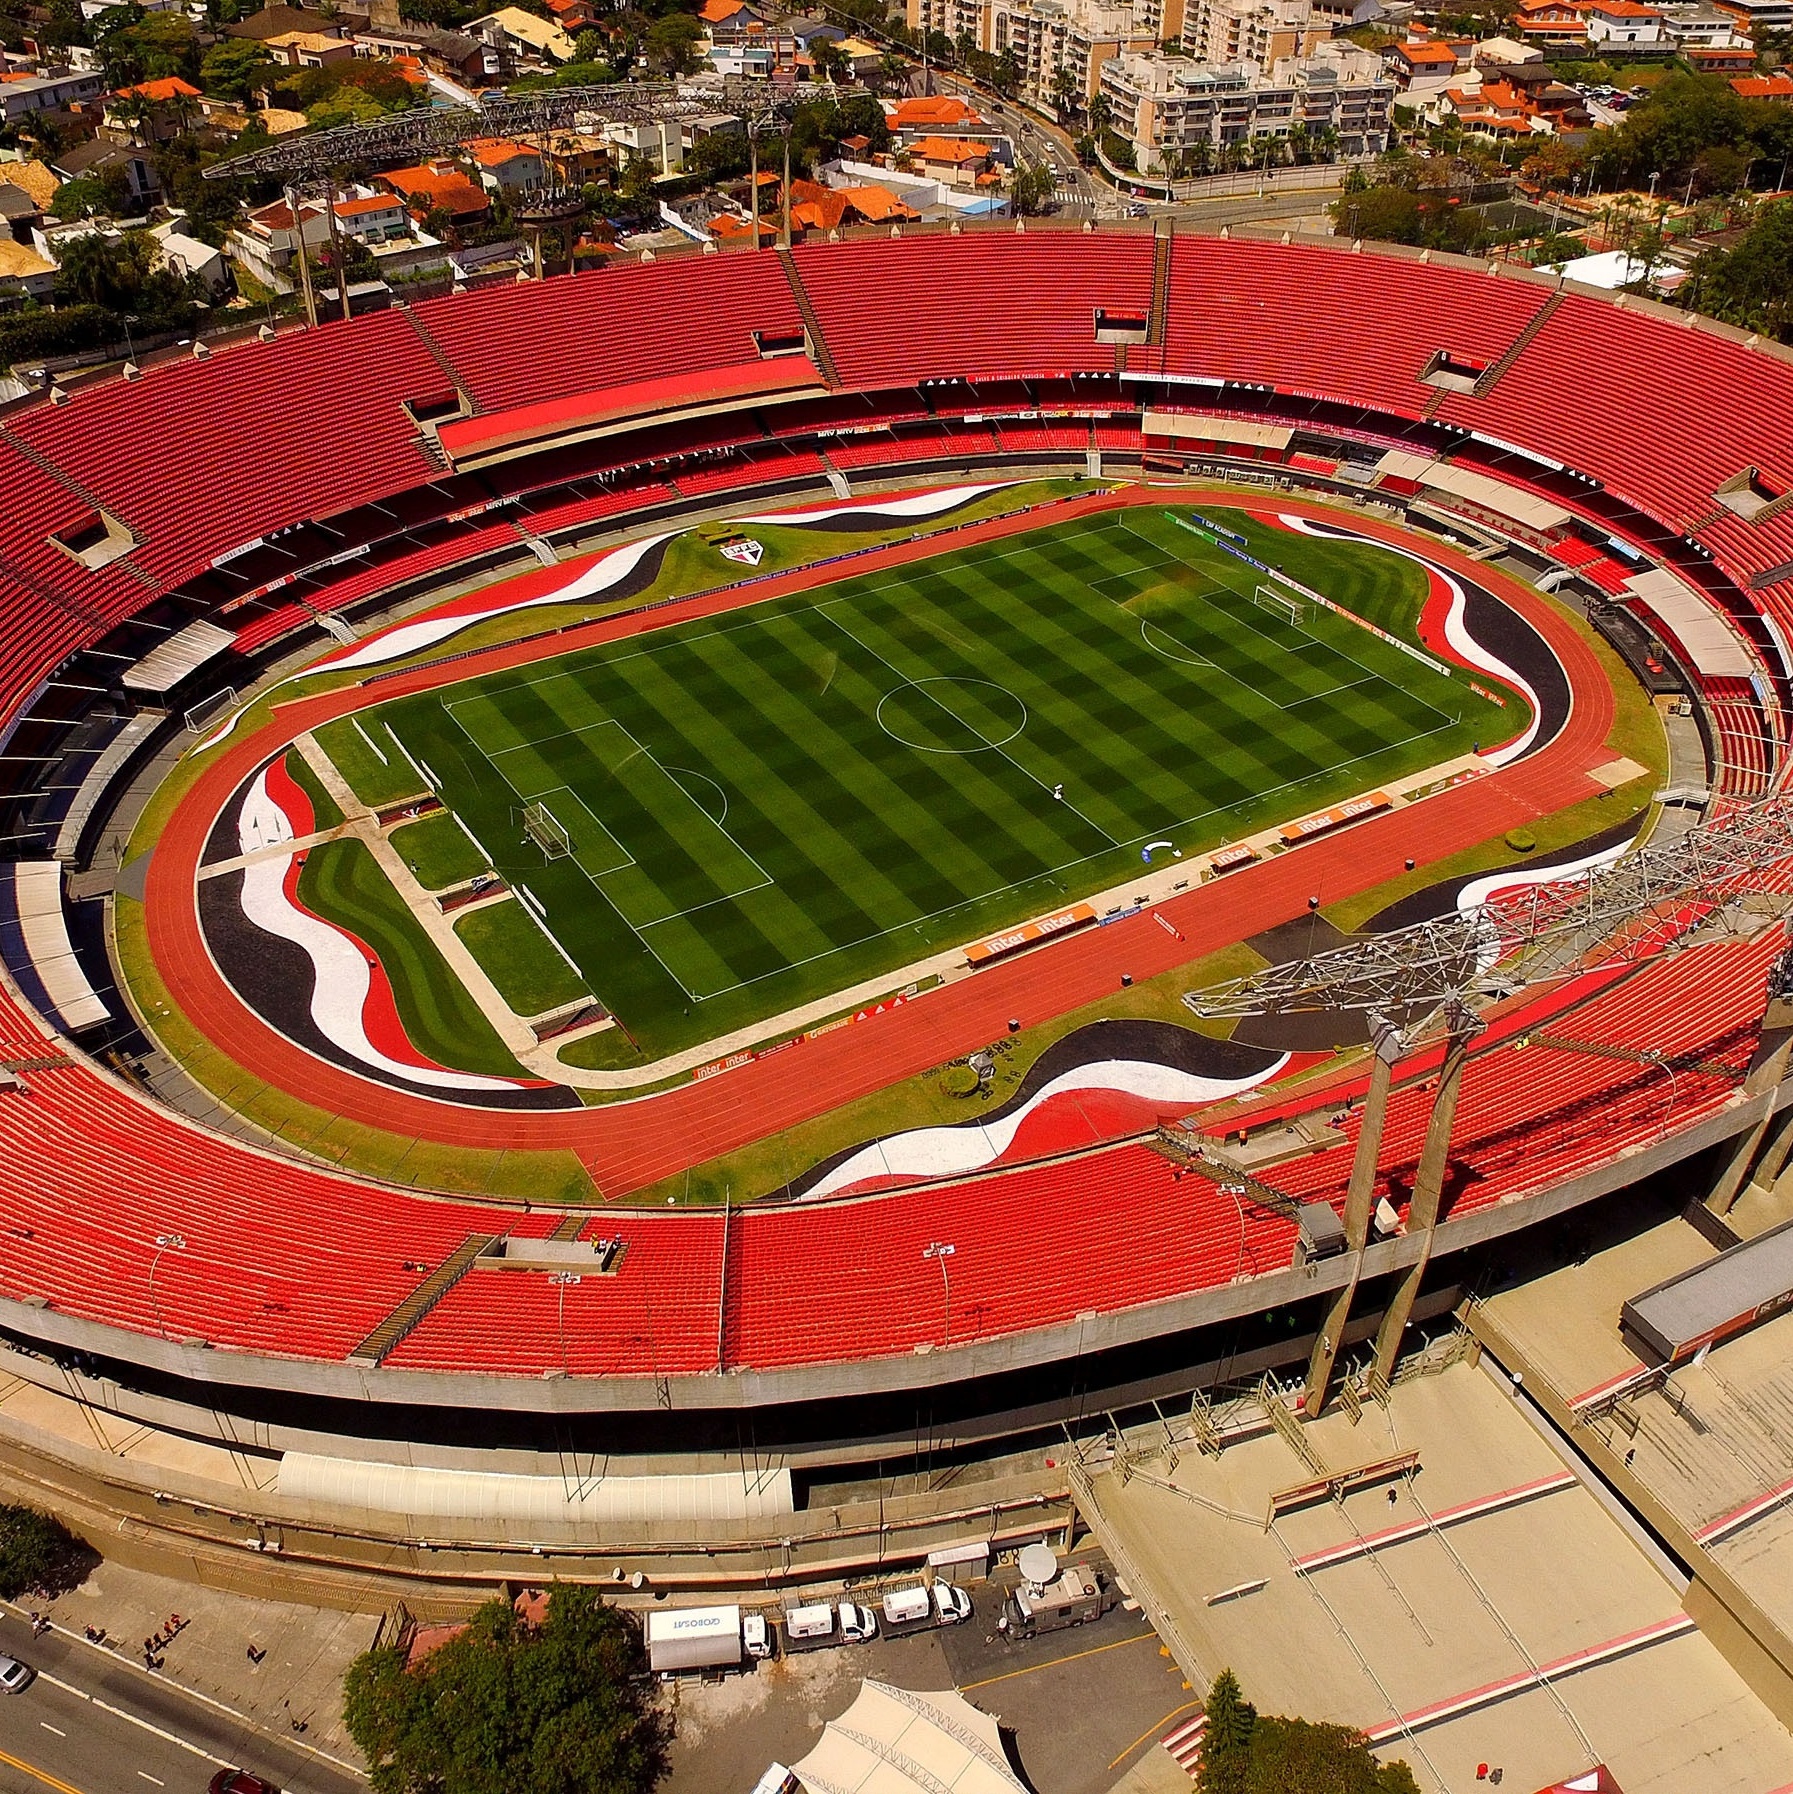 Vou Jogar no Morumbi 2019 - Estádio do Morumbi